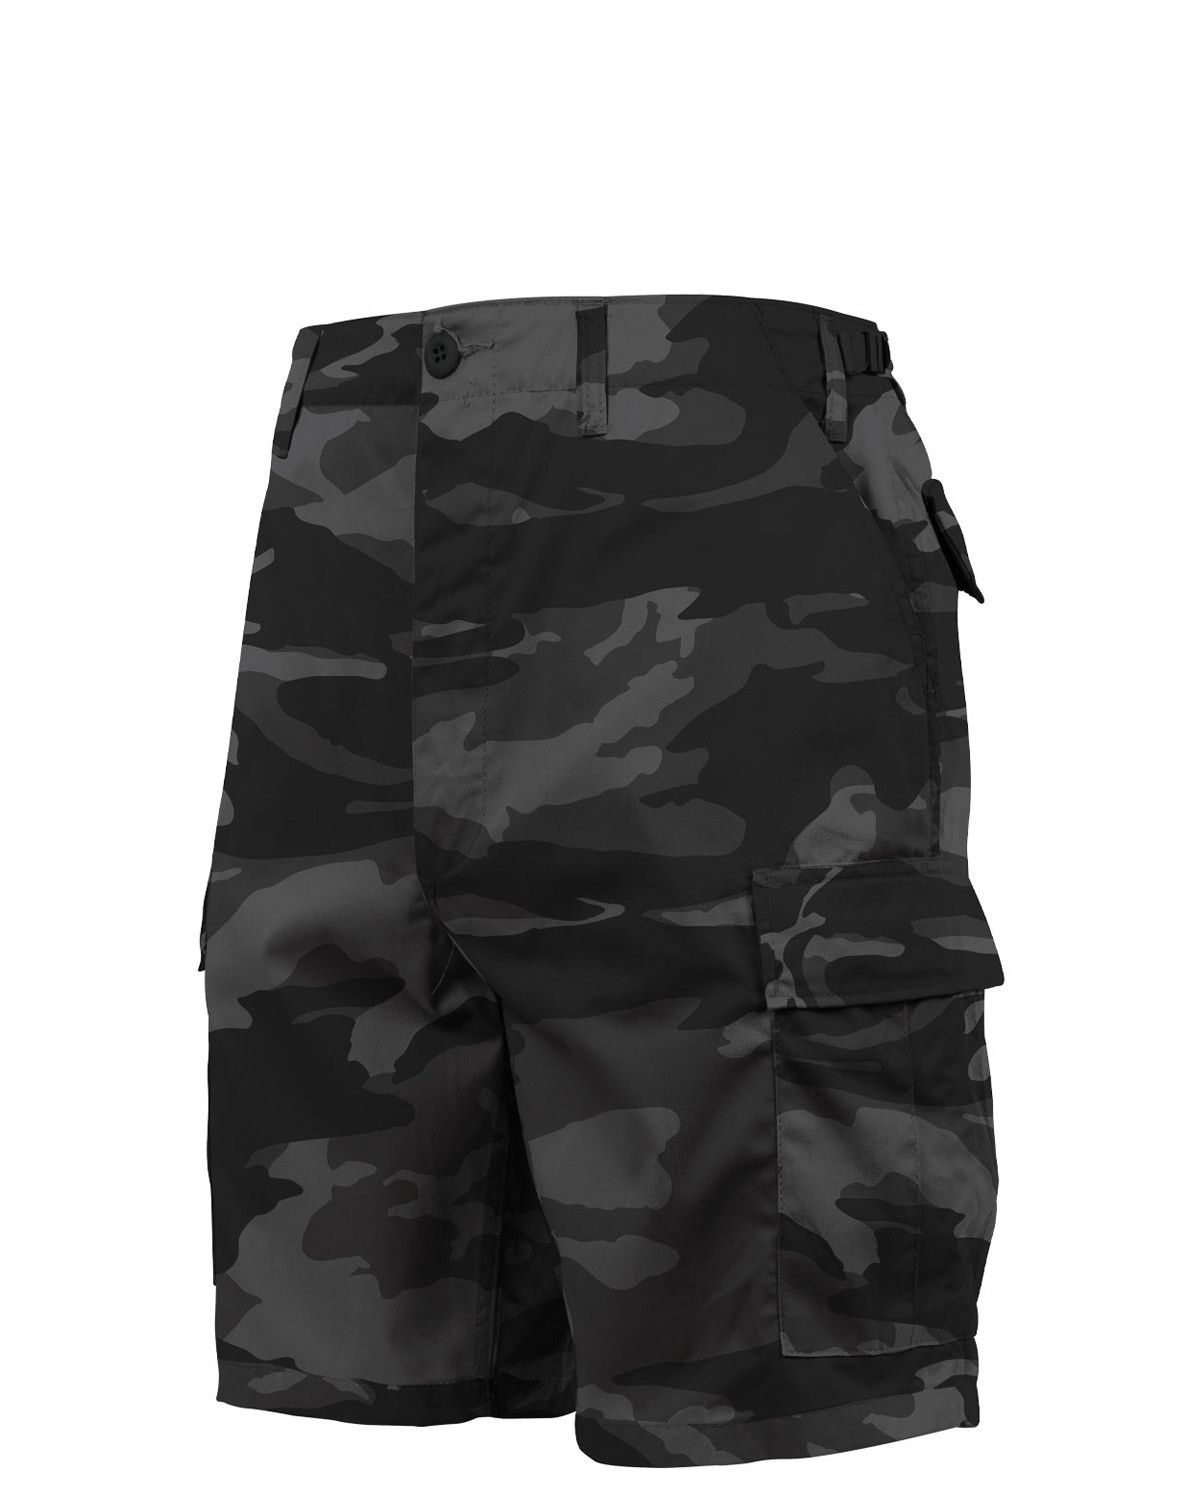 Rothco BDU Shorts (Black Camo, Large / 35"-43")